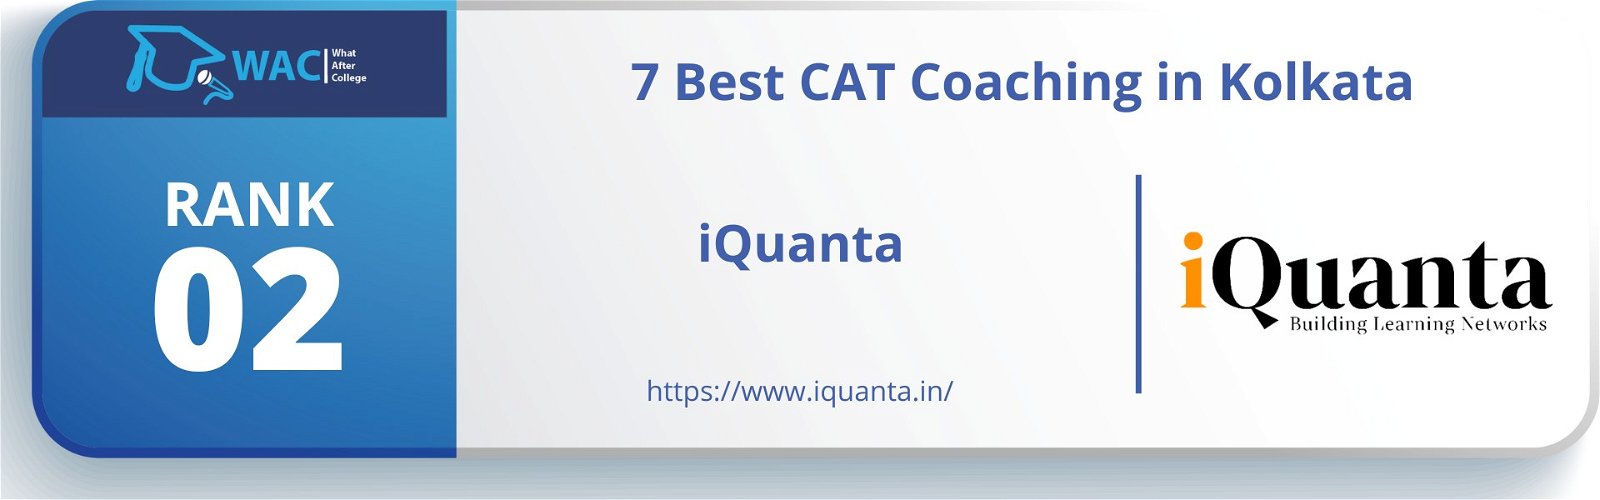 cat coaching in kolkata